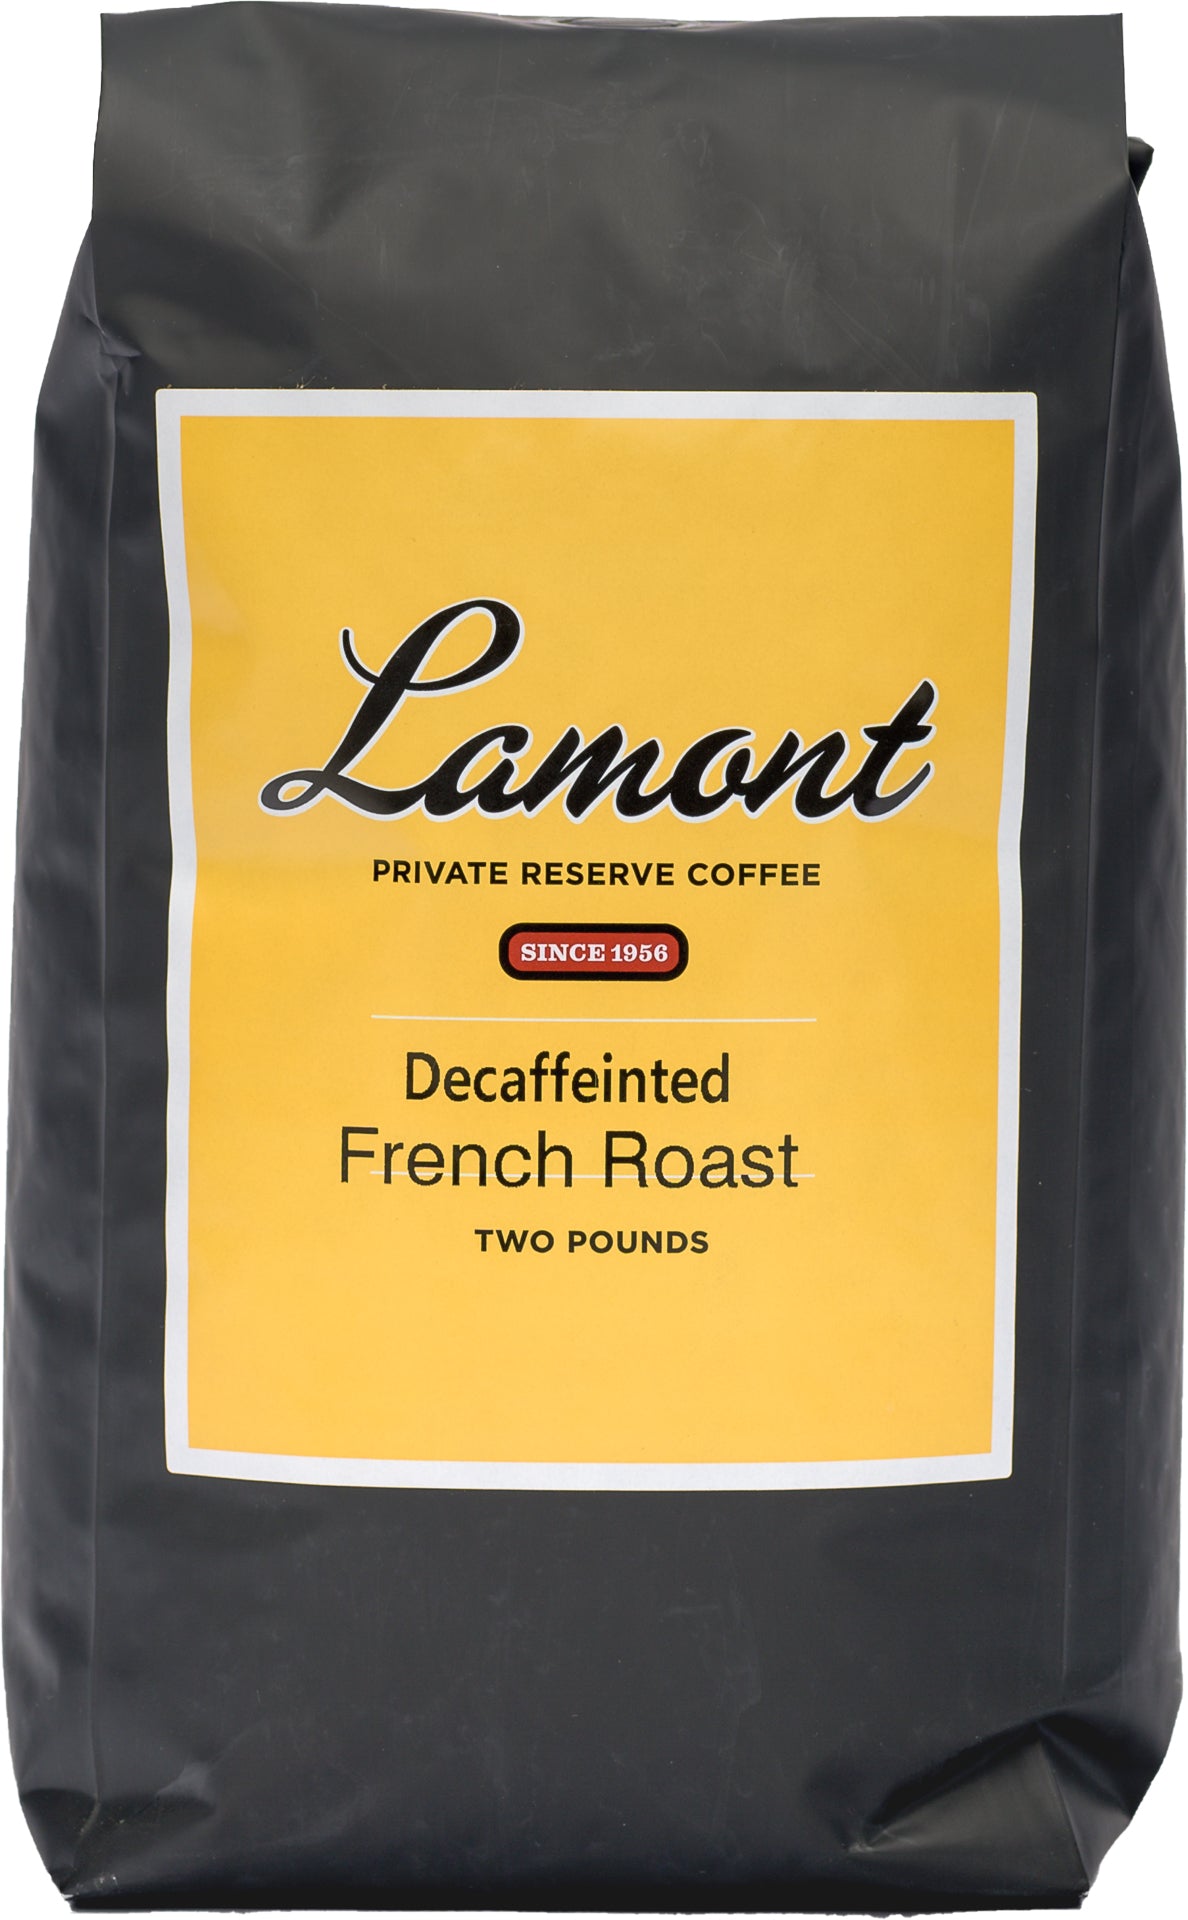 Decaffeinated French Roast - 2 lb. (32 oz.)